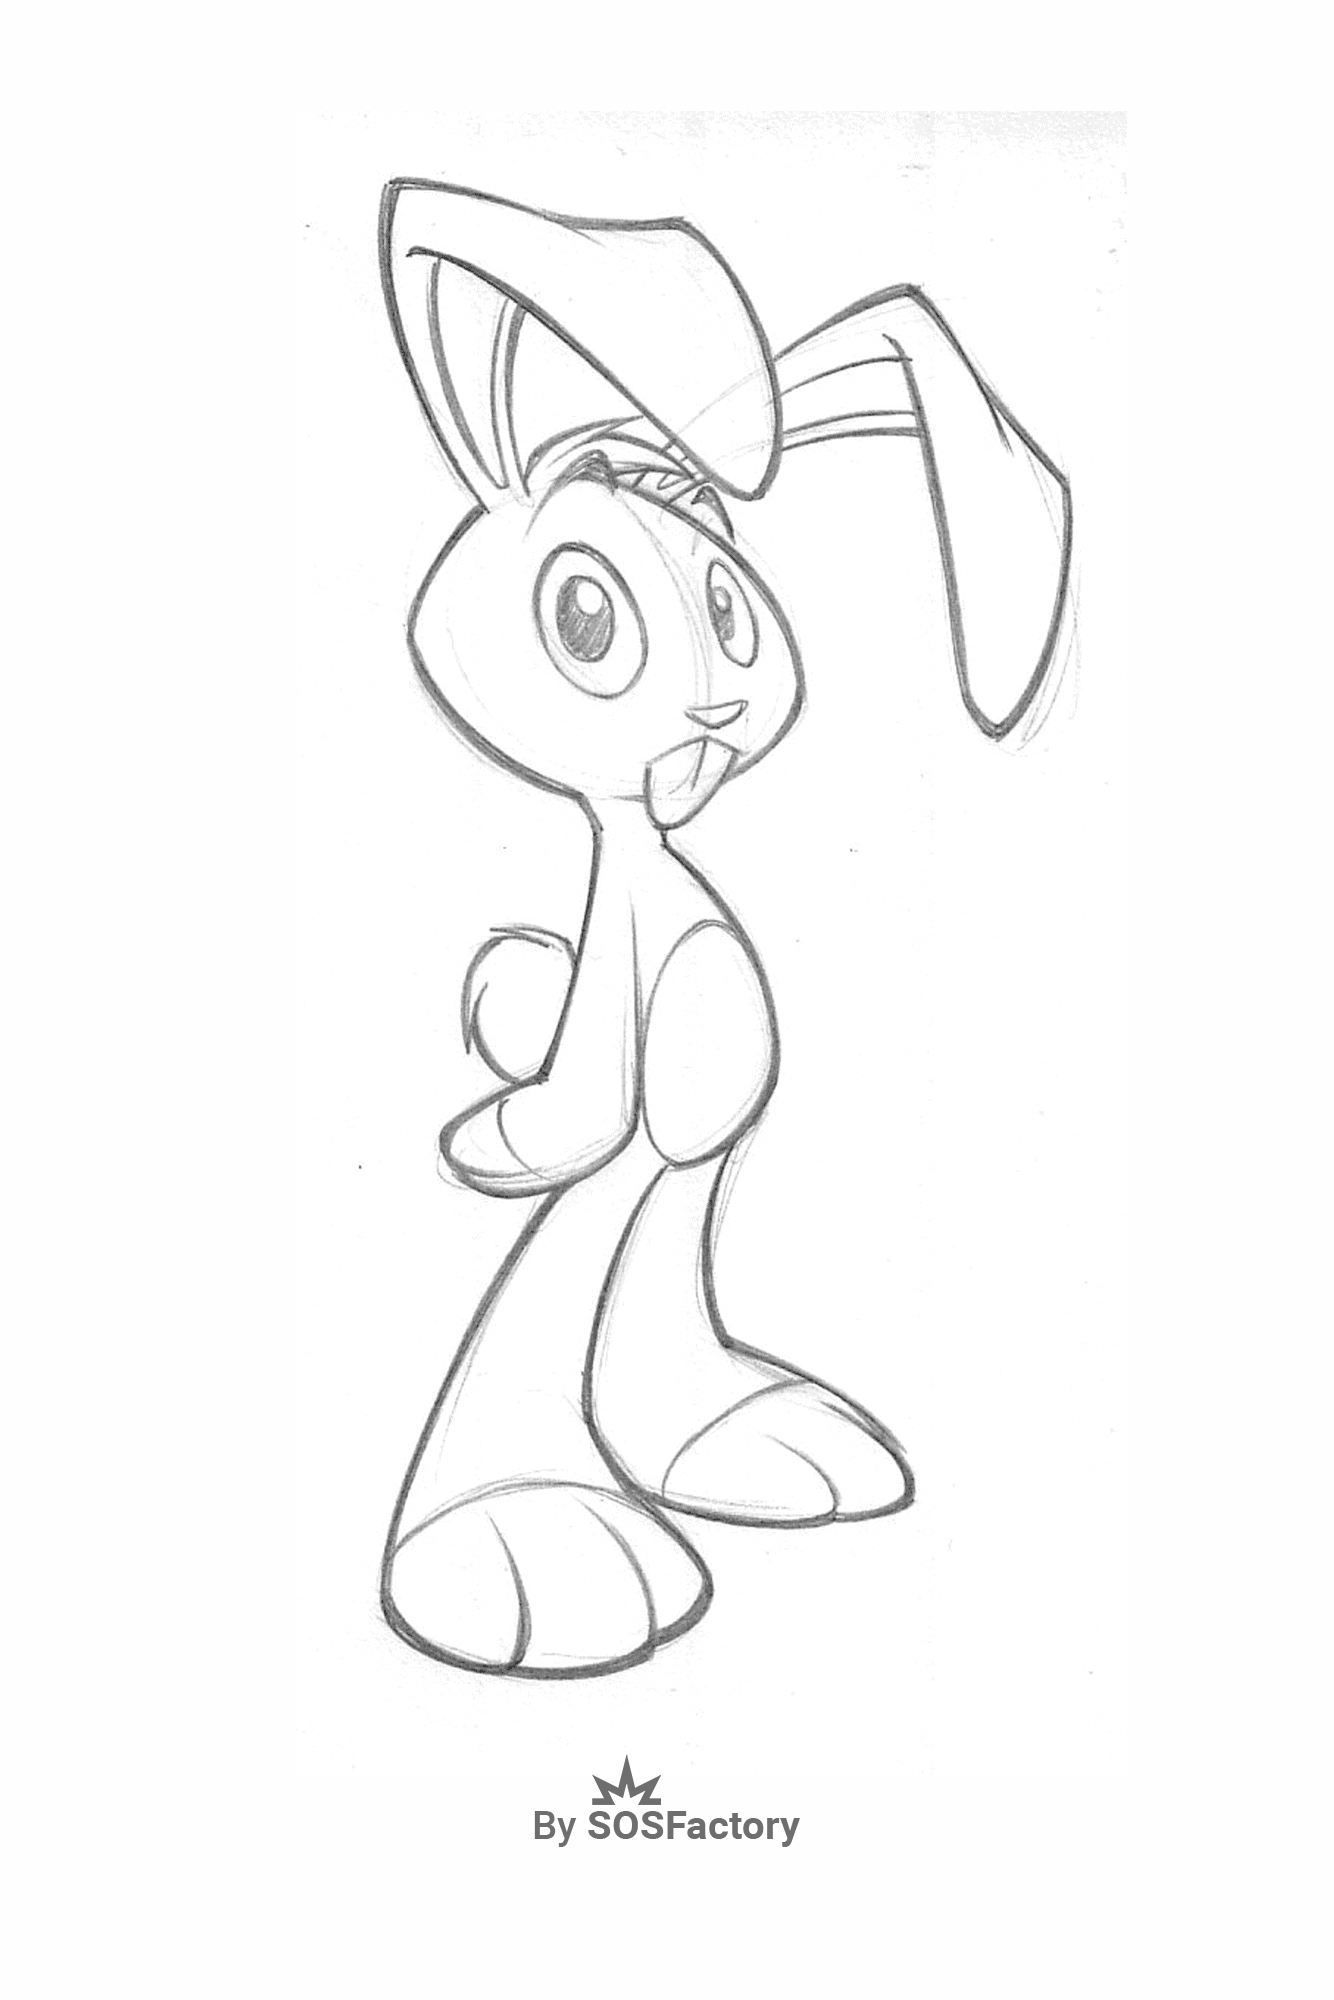 Rabbit cartoon character